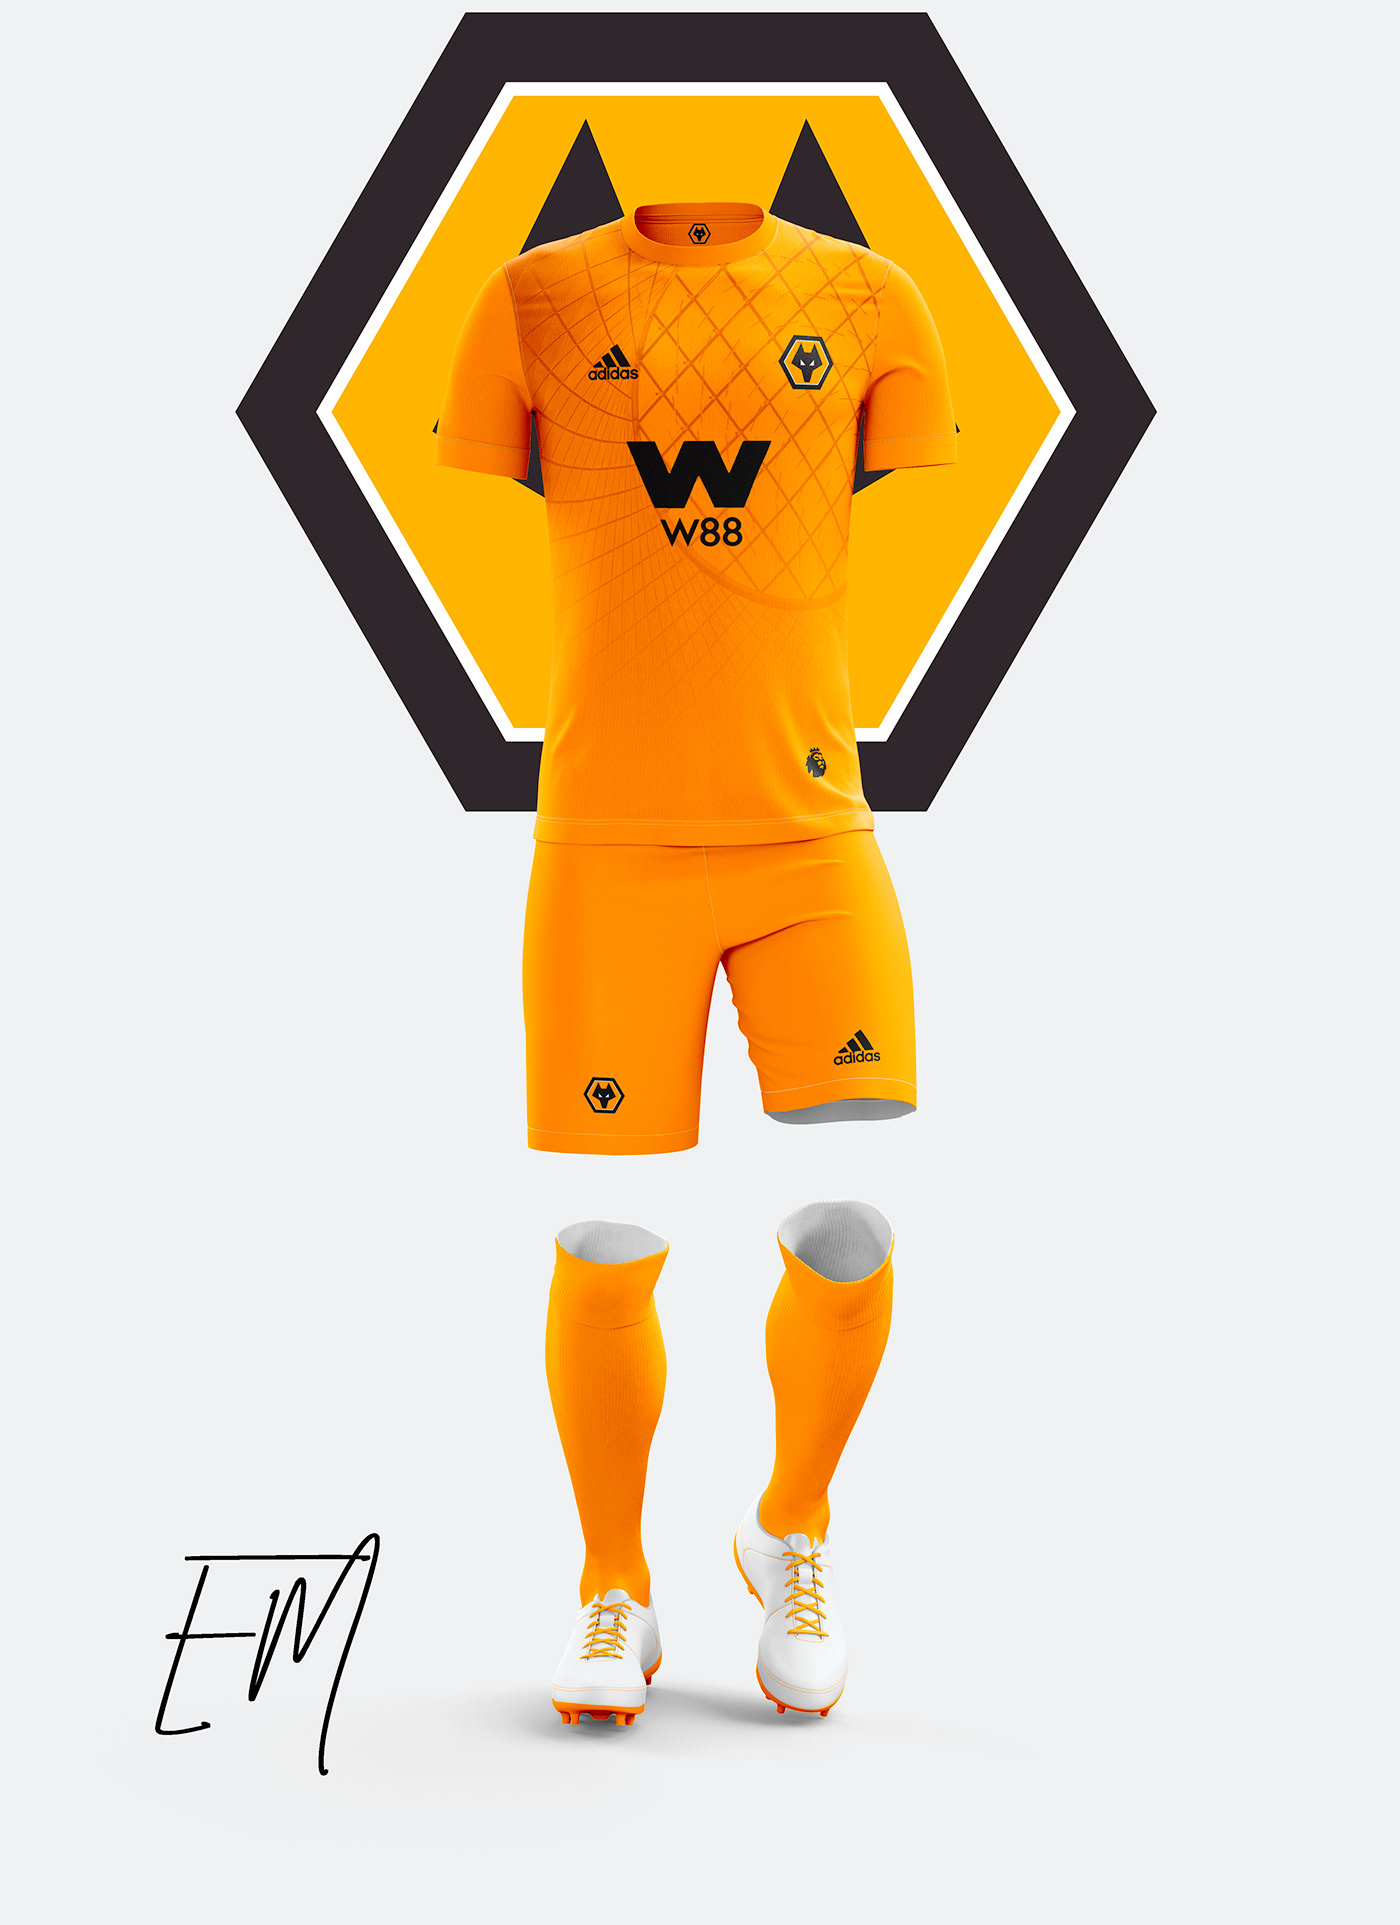 premiereleague soccer england concept orange wolf Wolverhampton jersey